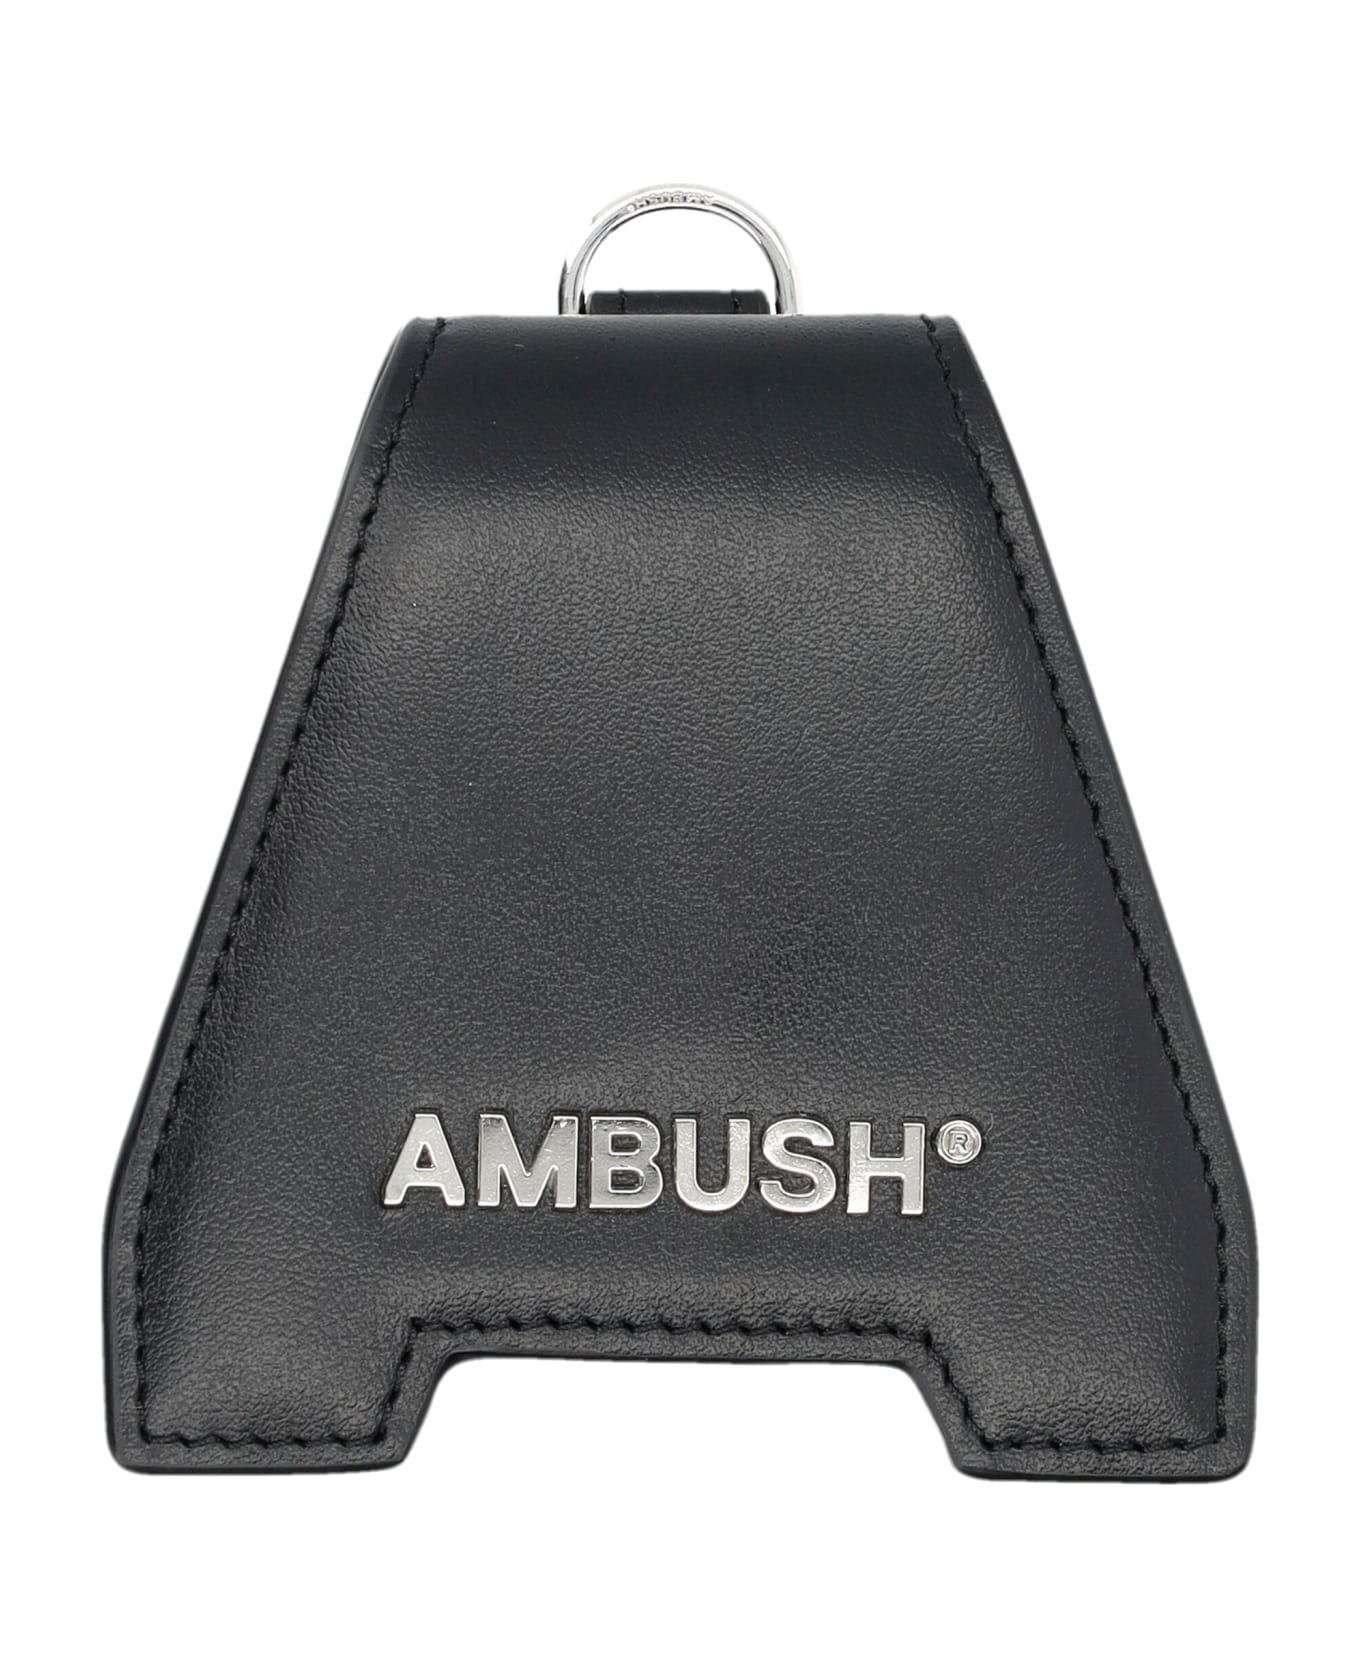 AMBUSH 'a' Flap Airpods Case - BLACK